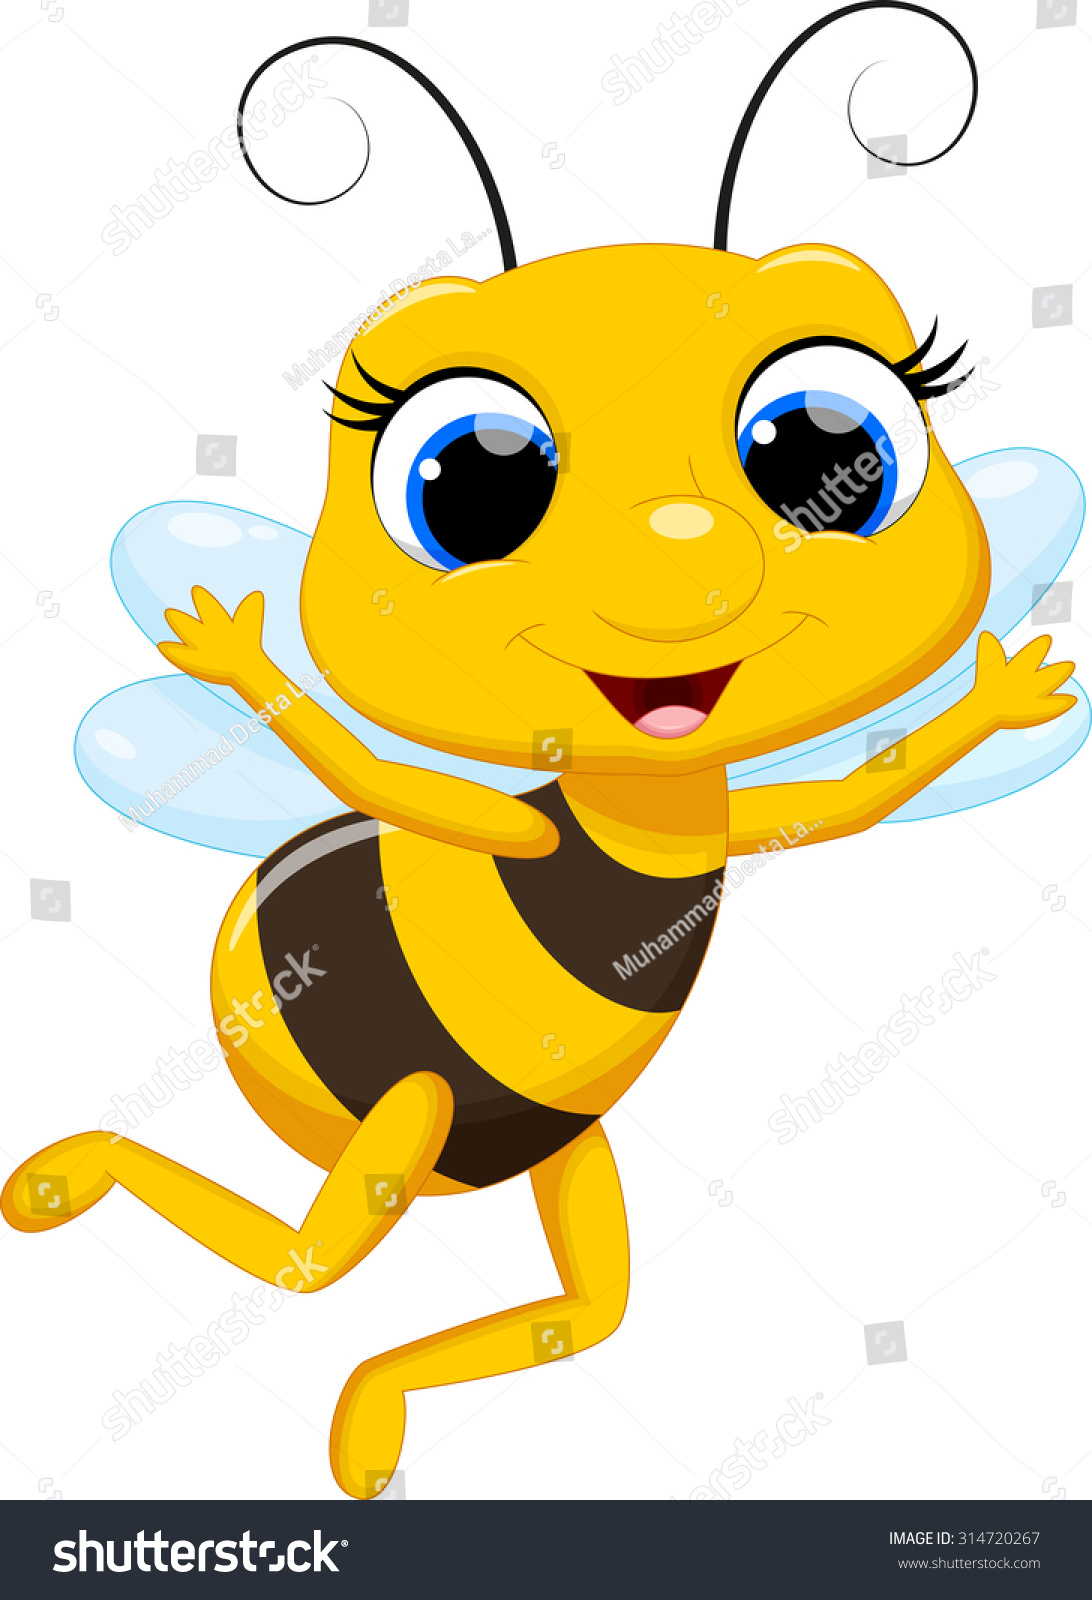 Cute Queen Bee Cartoon: стоковая иллюстрация, 314720267.